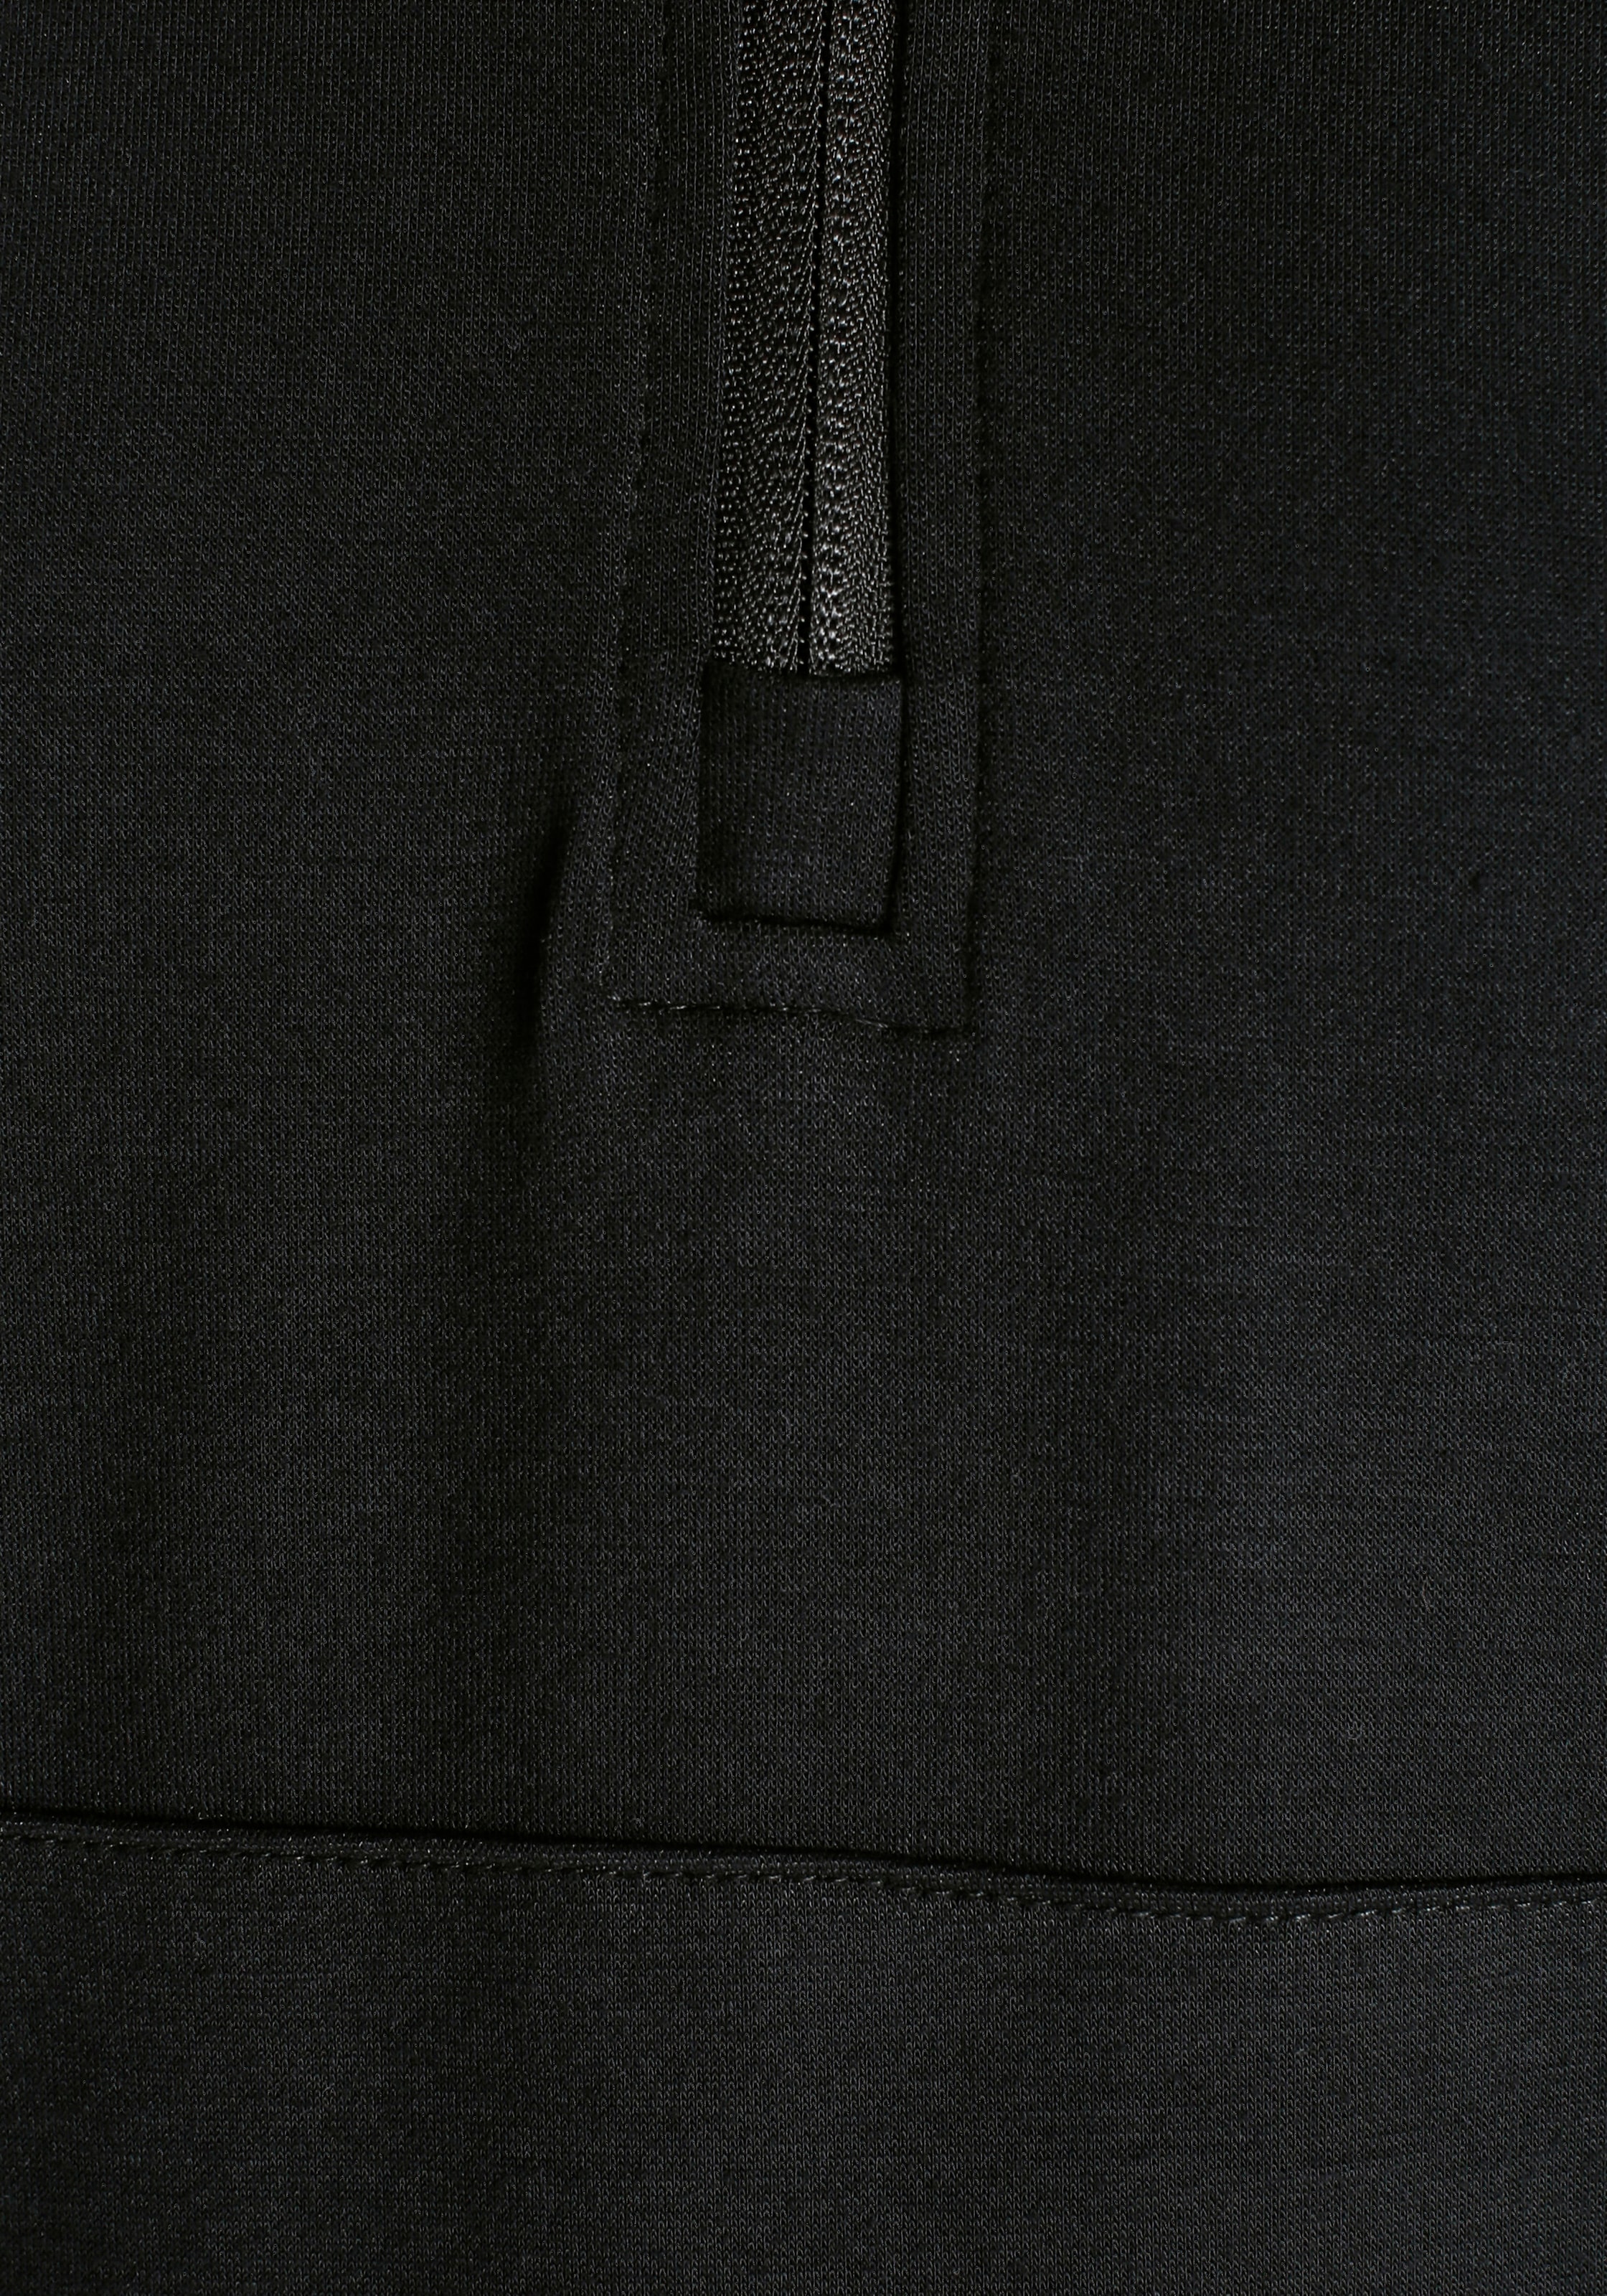 FAYN SPORTS Kapuzensweatshirt »After Class«, aus weicher Interlock Ware